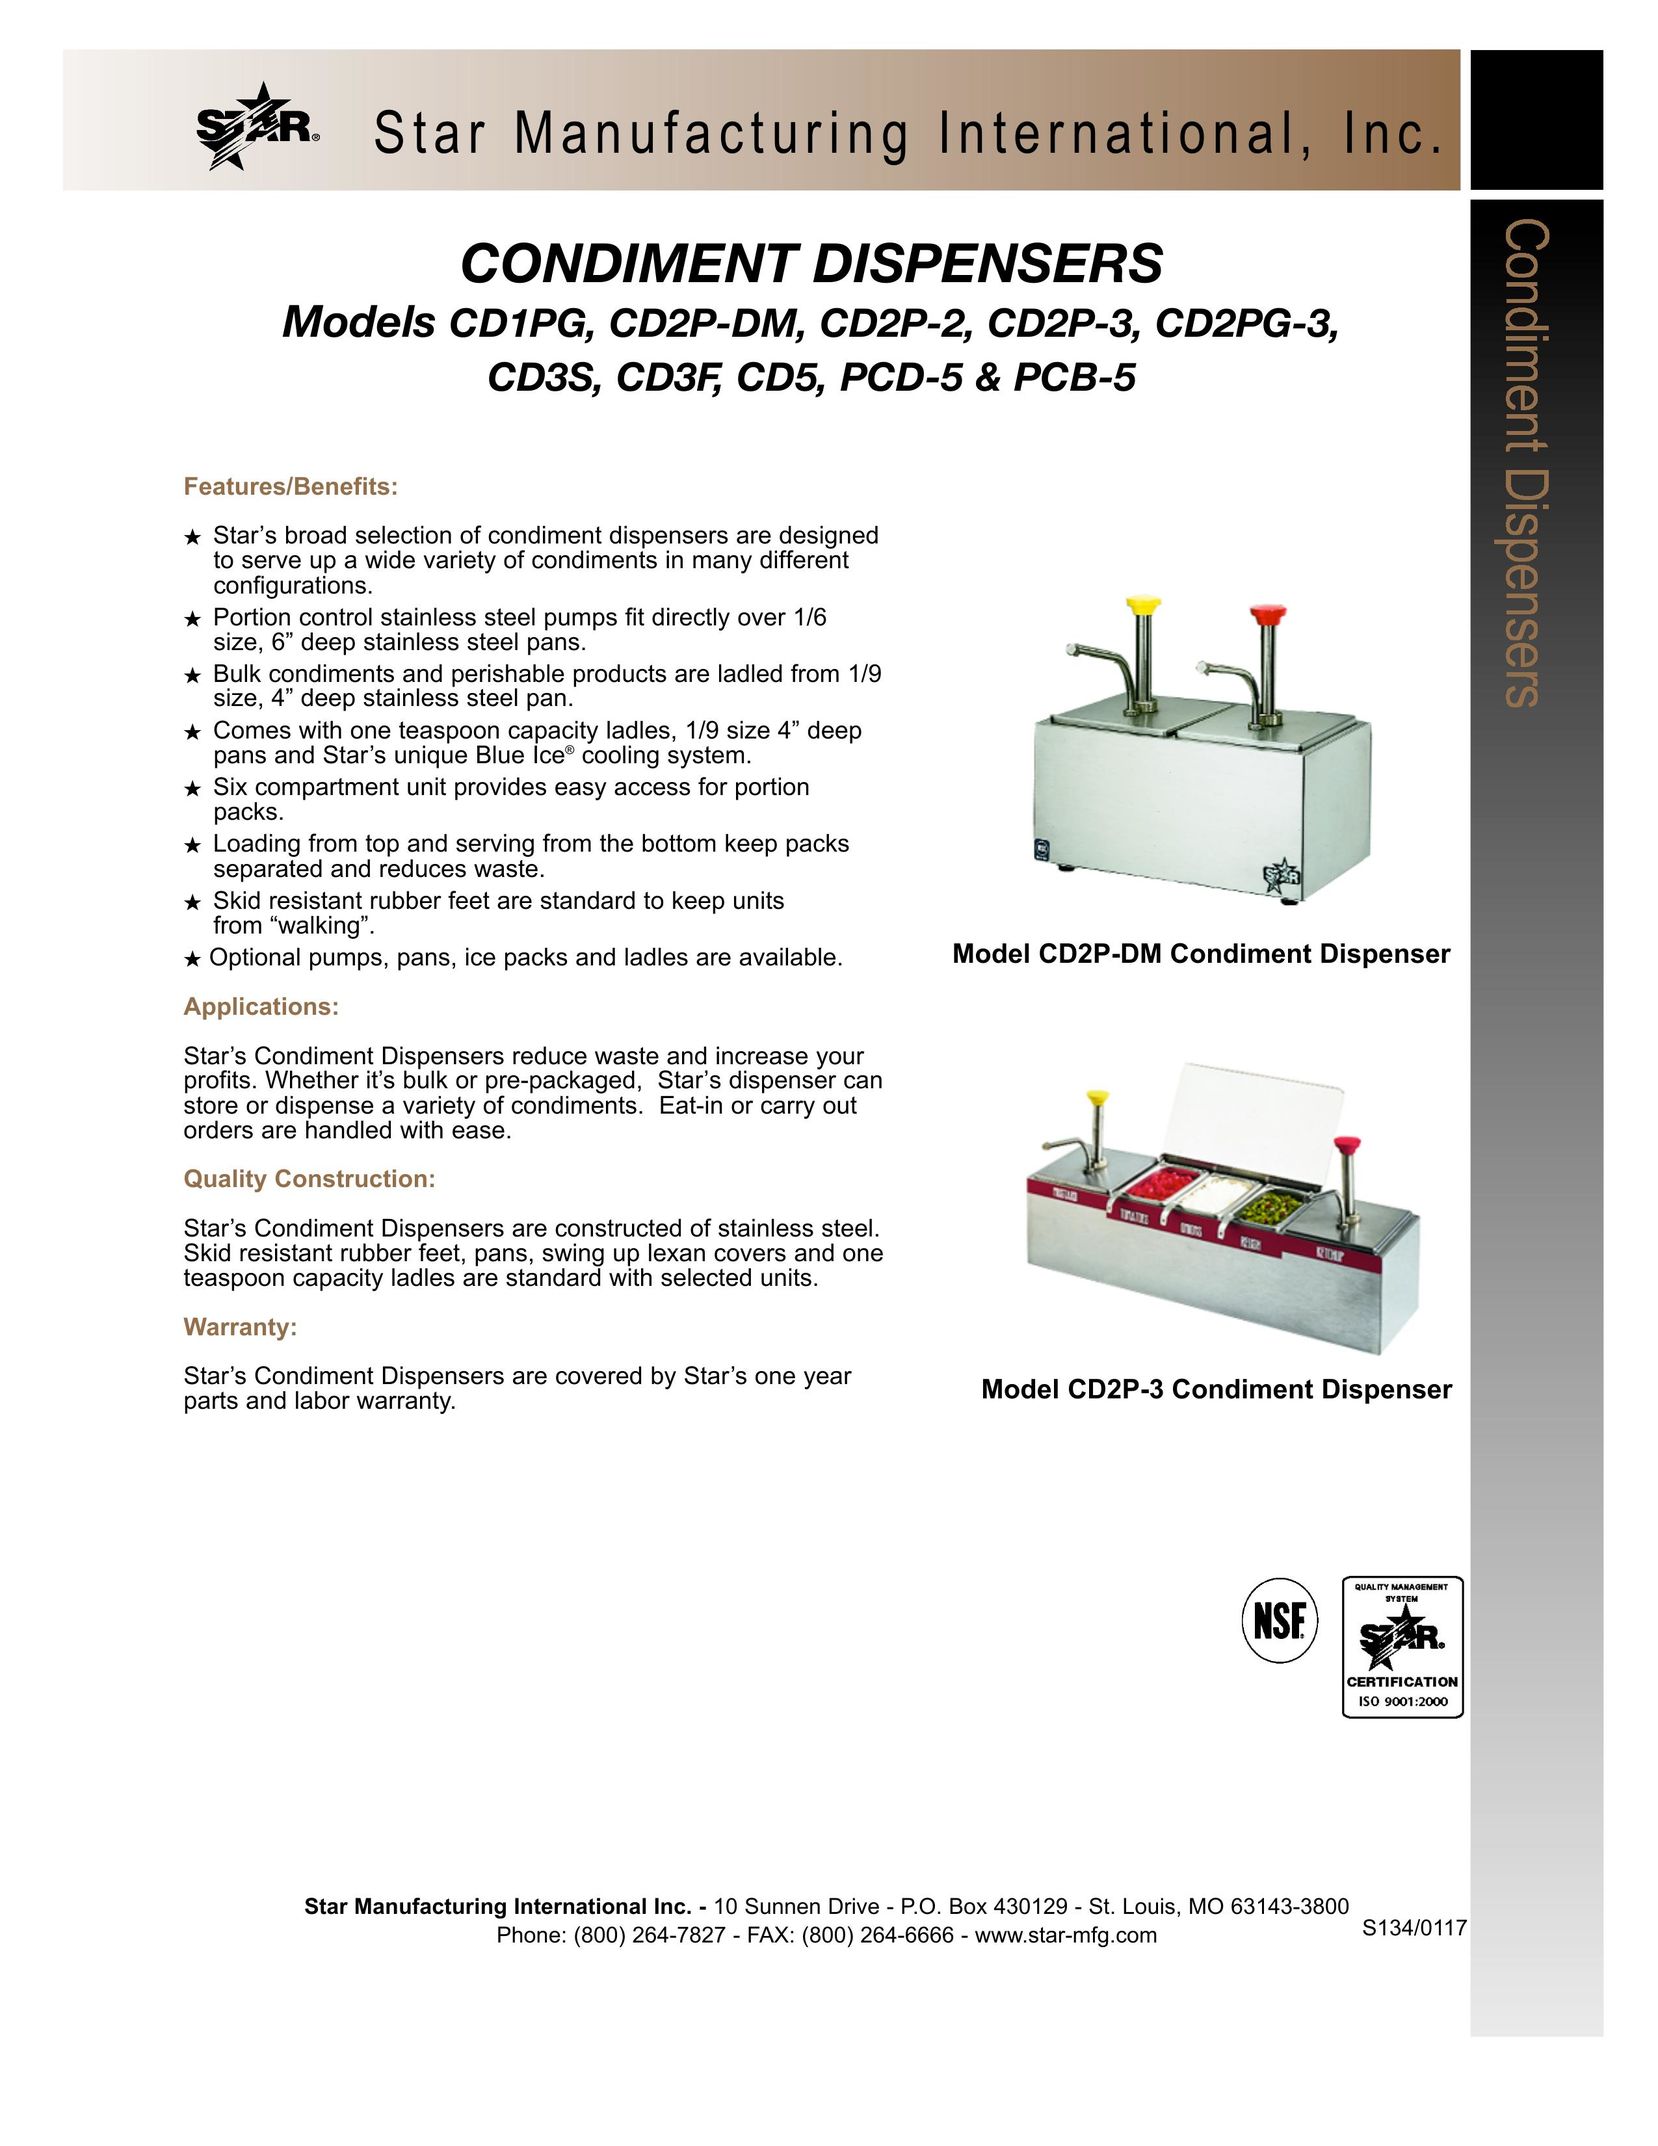 Star Manufacturing CD3S Beverage Dispenser User Manual